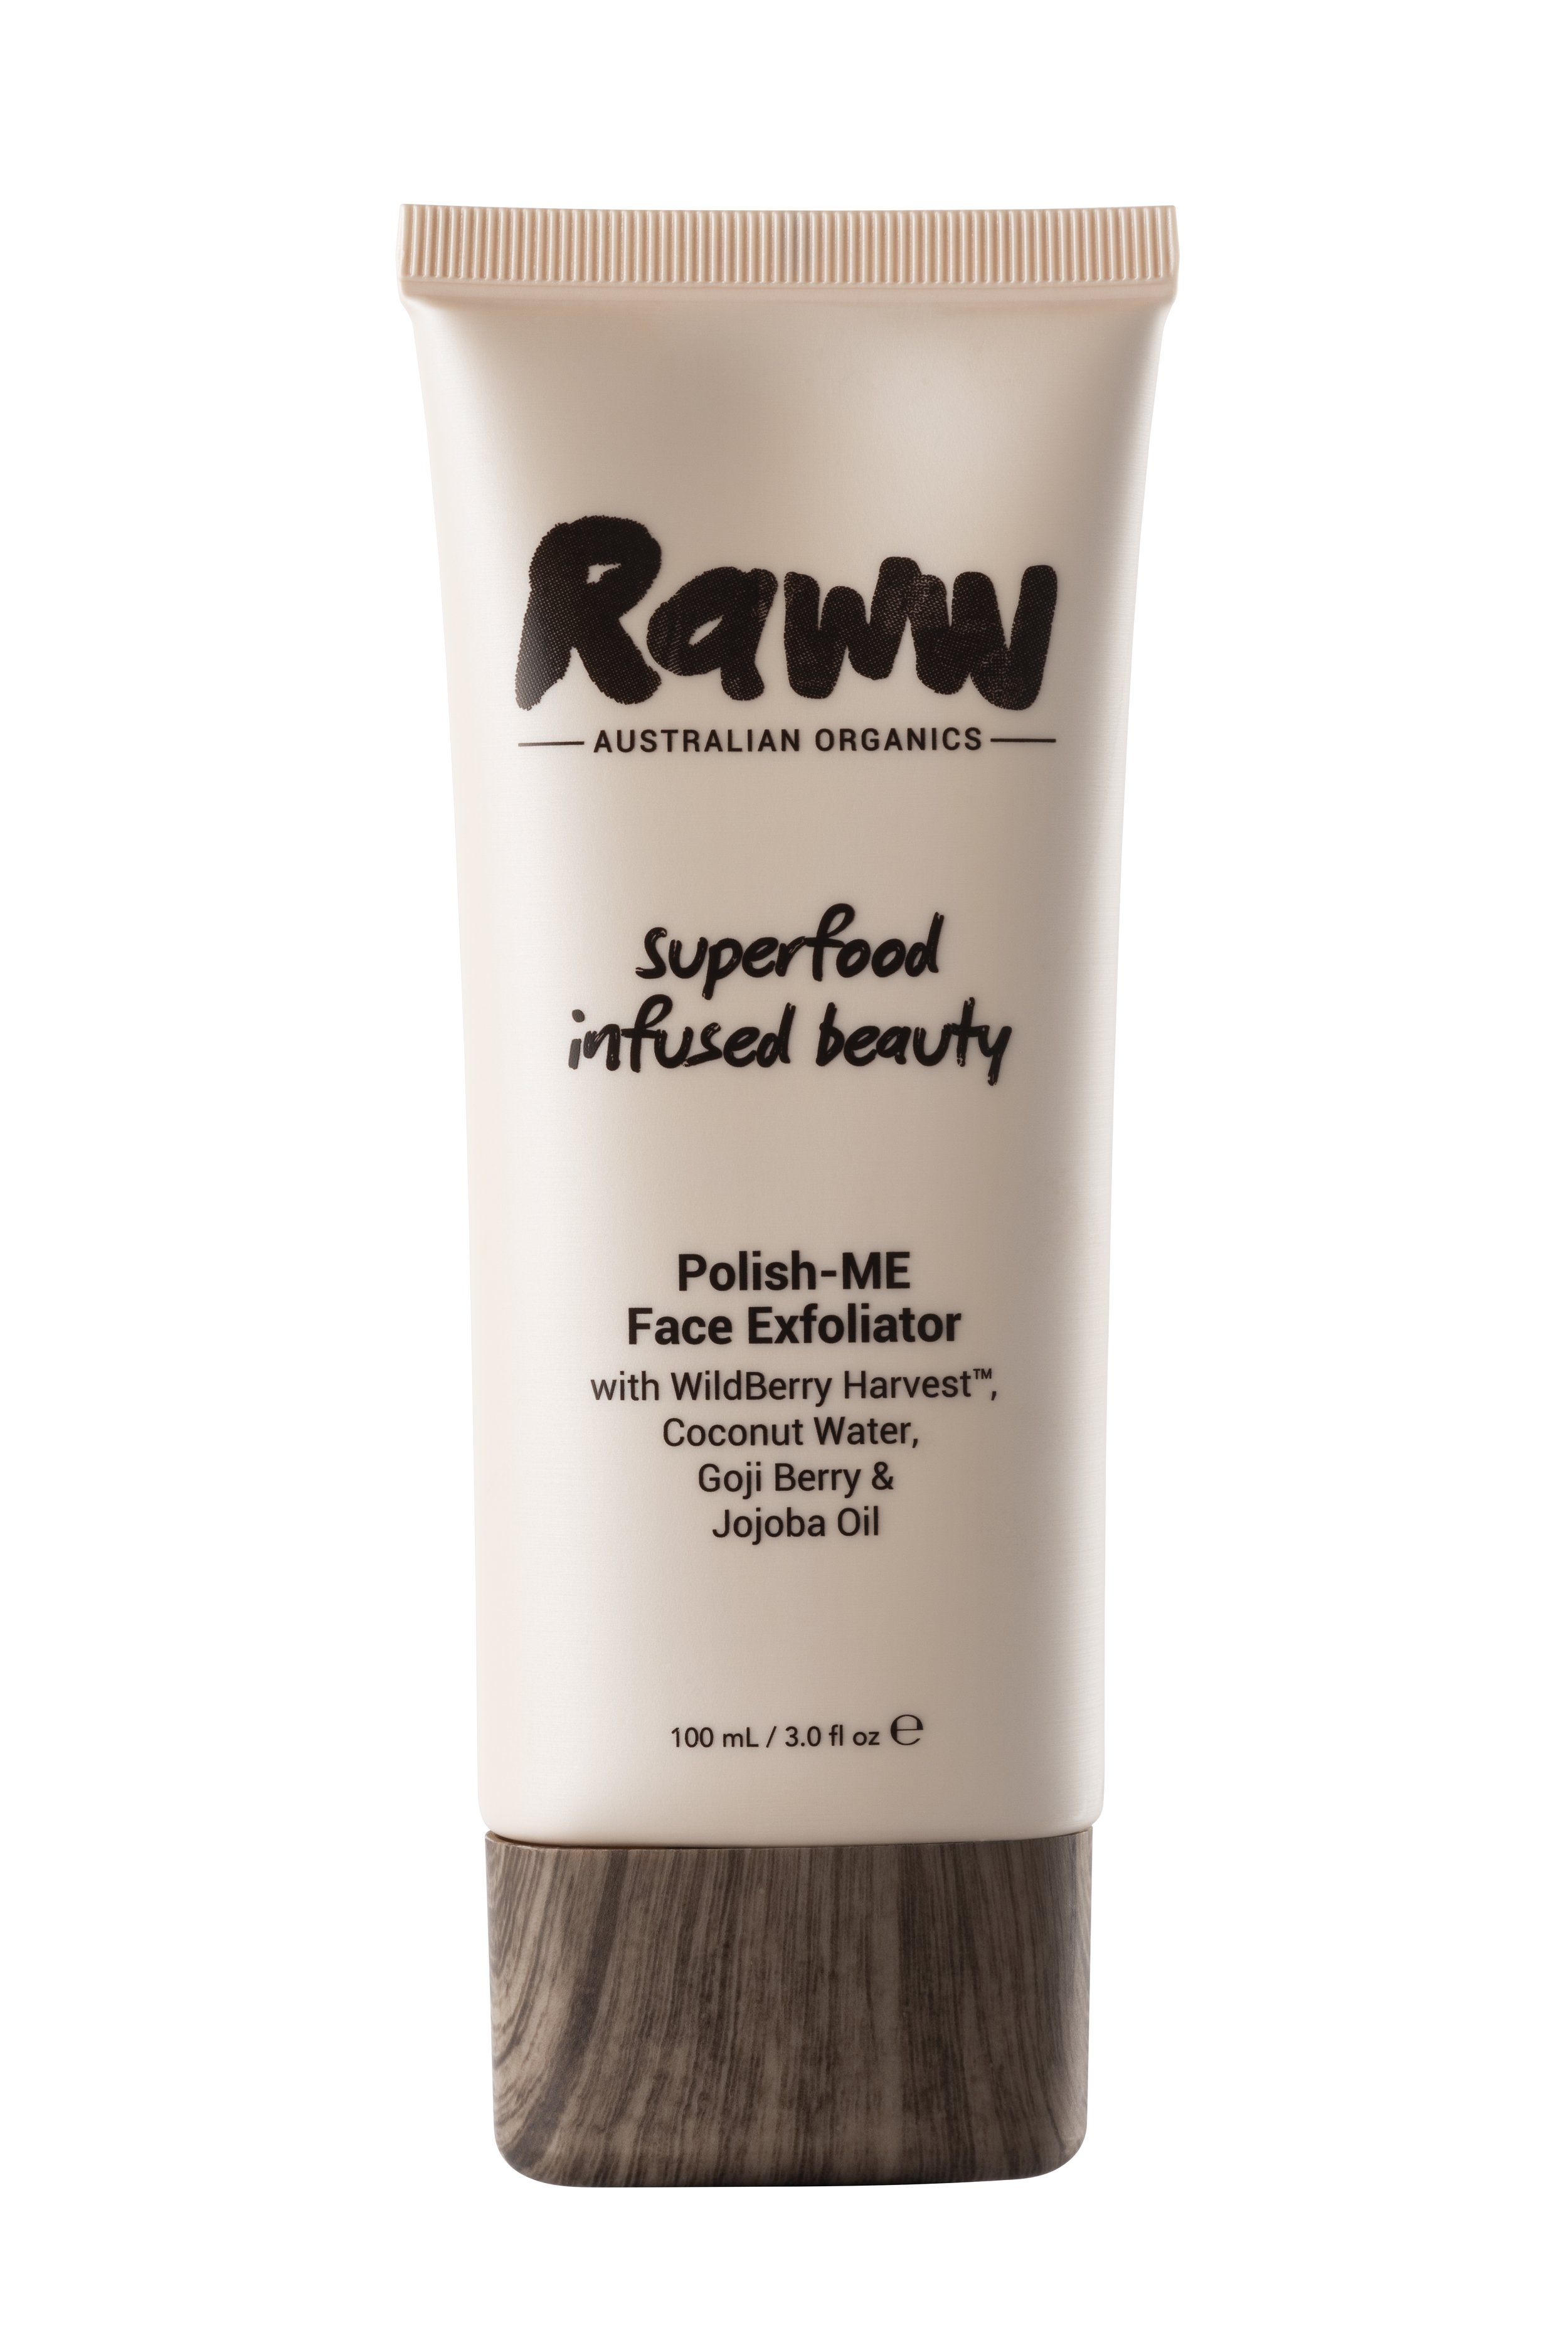 RAWW Polish-ME Face Exfoliator.jpg